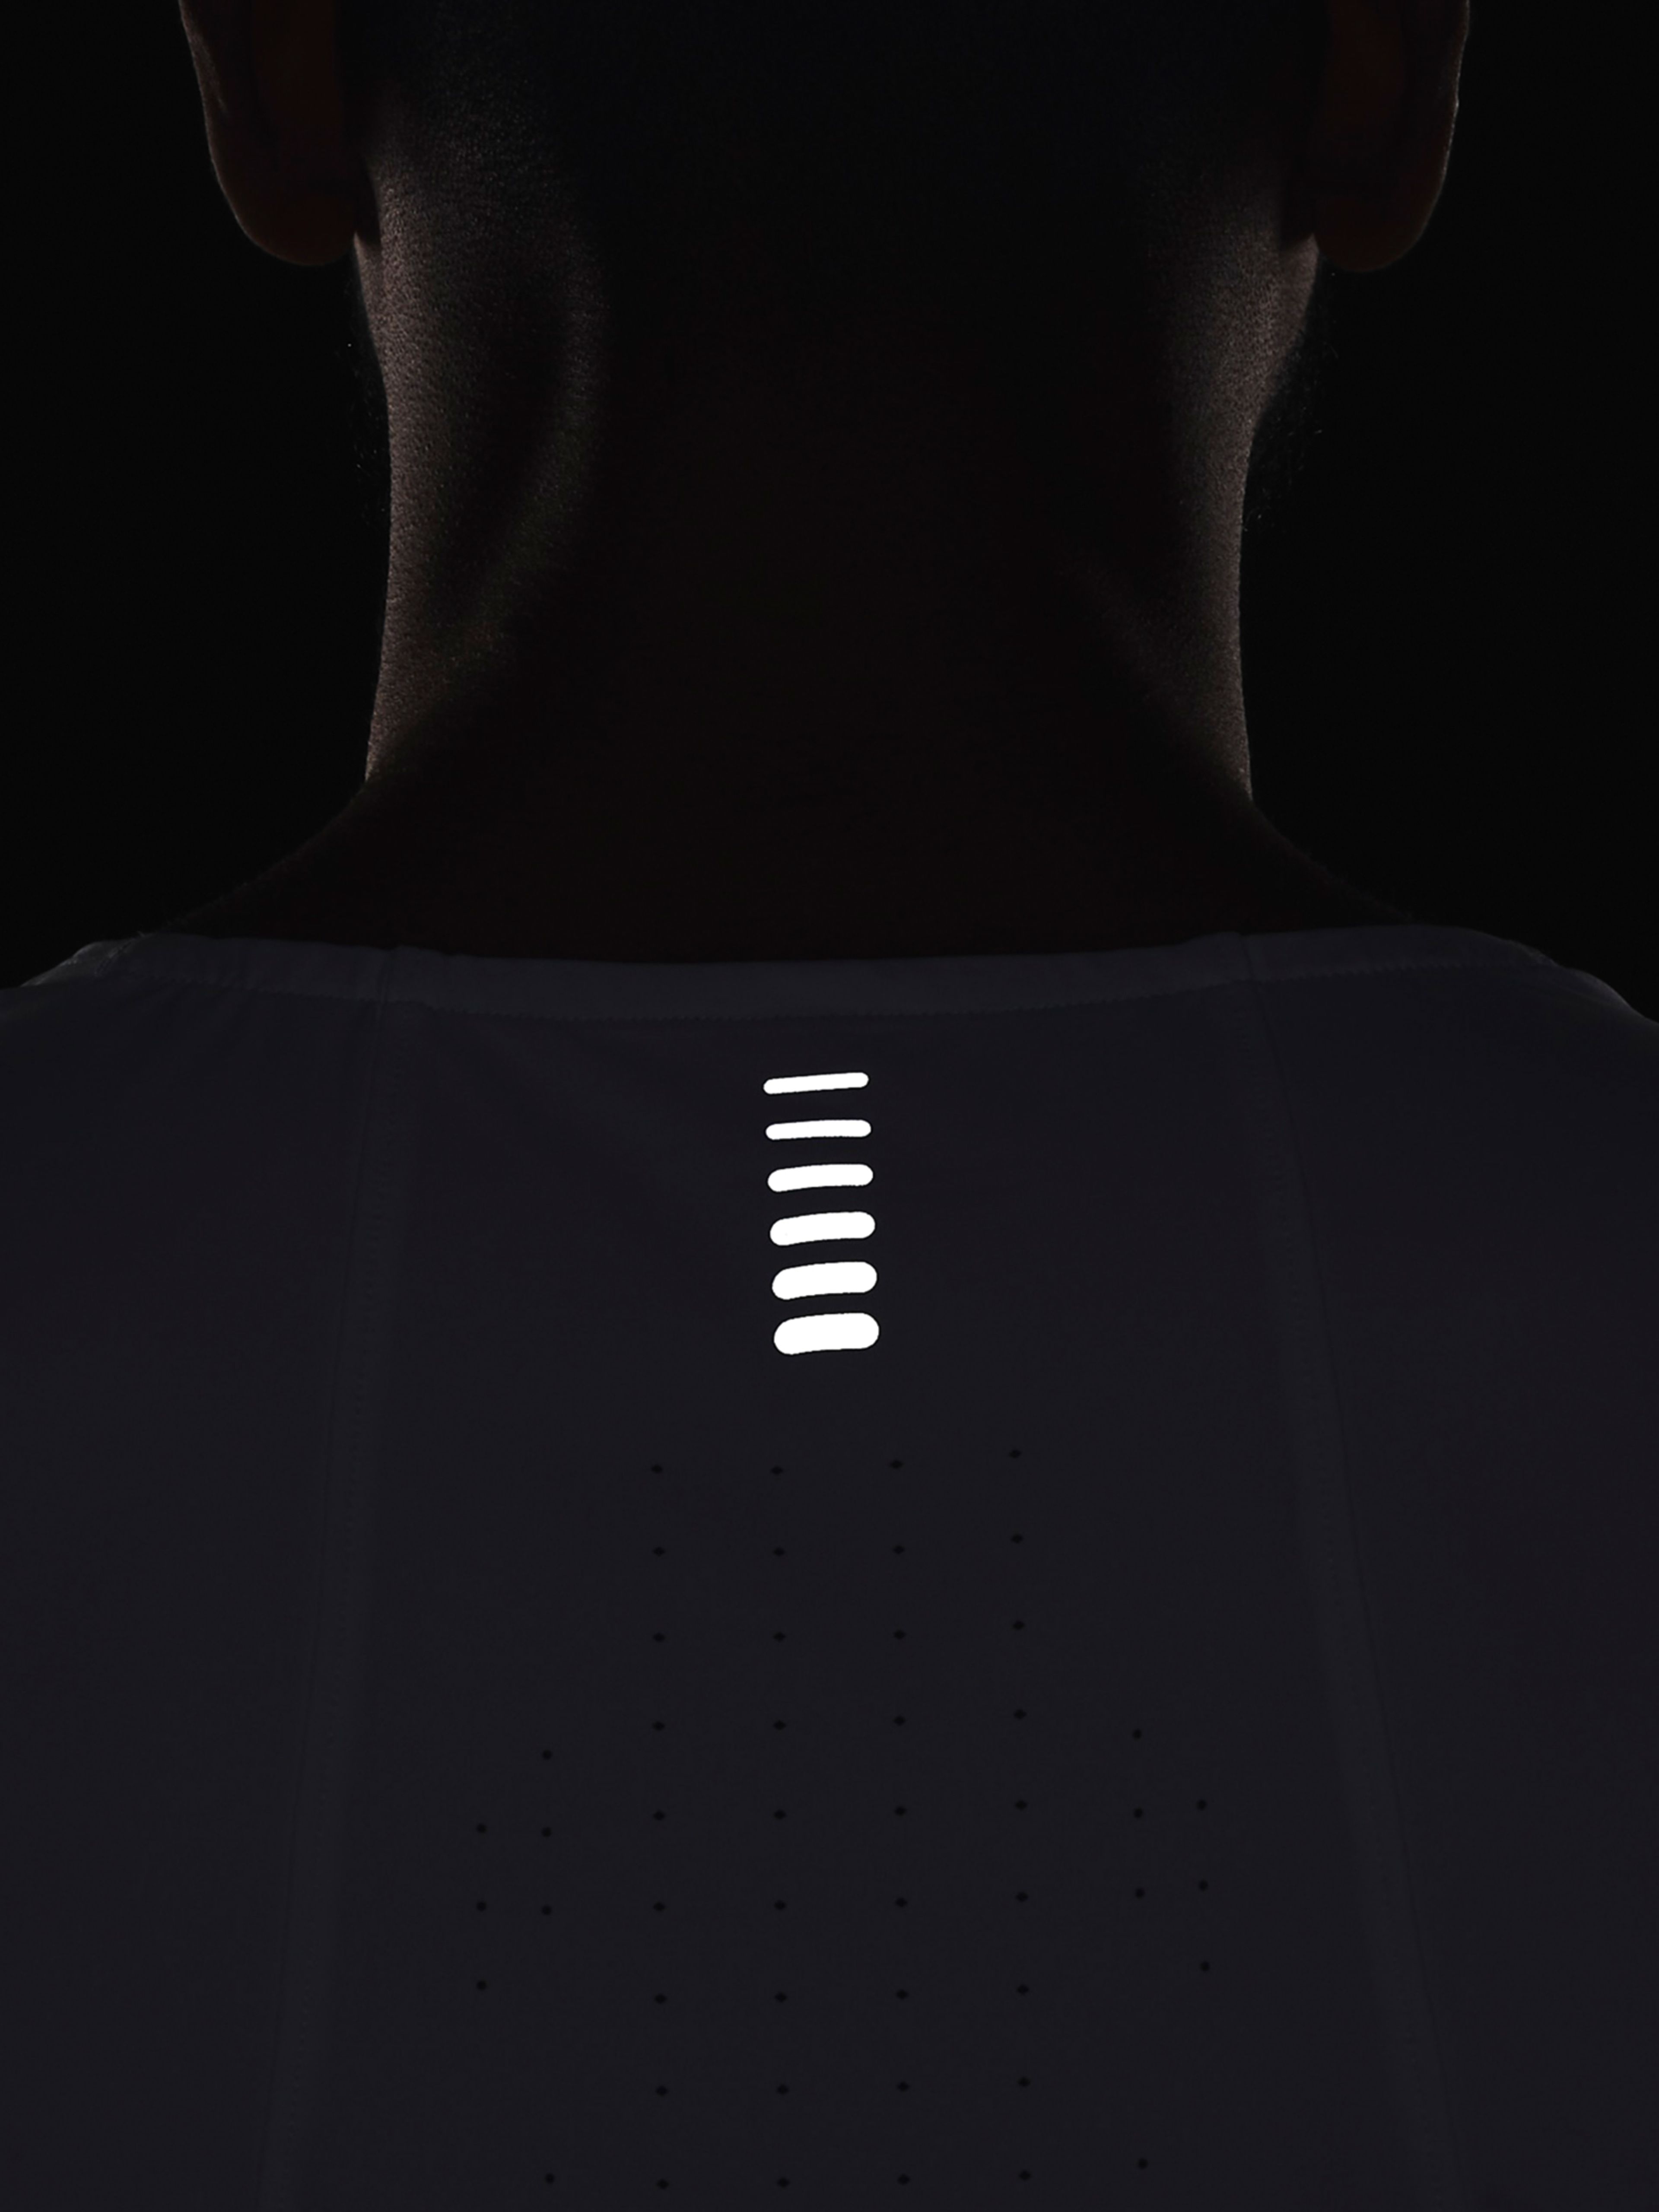  UA Iso-Chill Laser Tee-BLK - men's running shirt - UNDER  ARMOUR - 48.34 € - outdoorové oblečení a vybavení shop